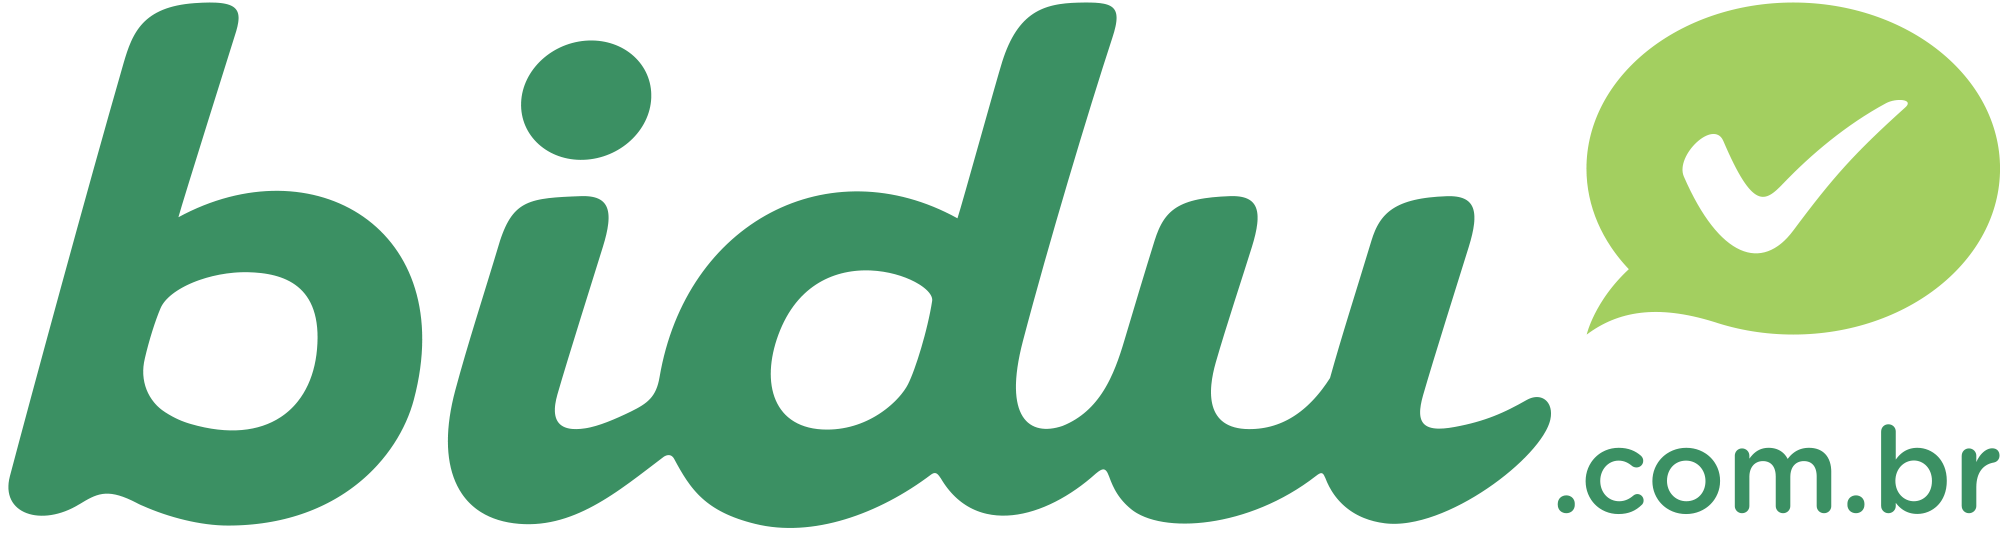 Baidu Inc.